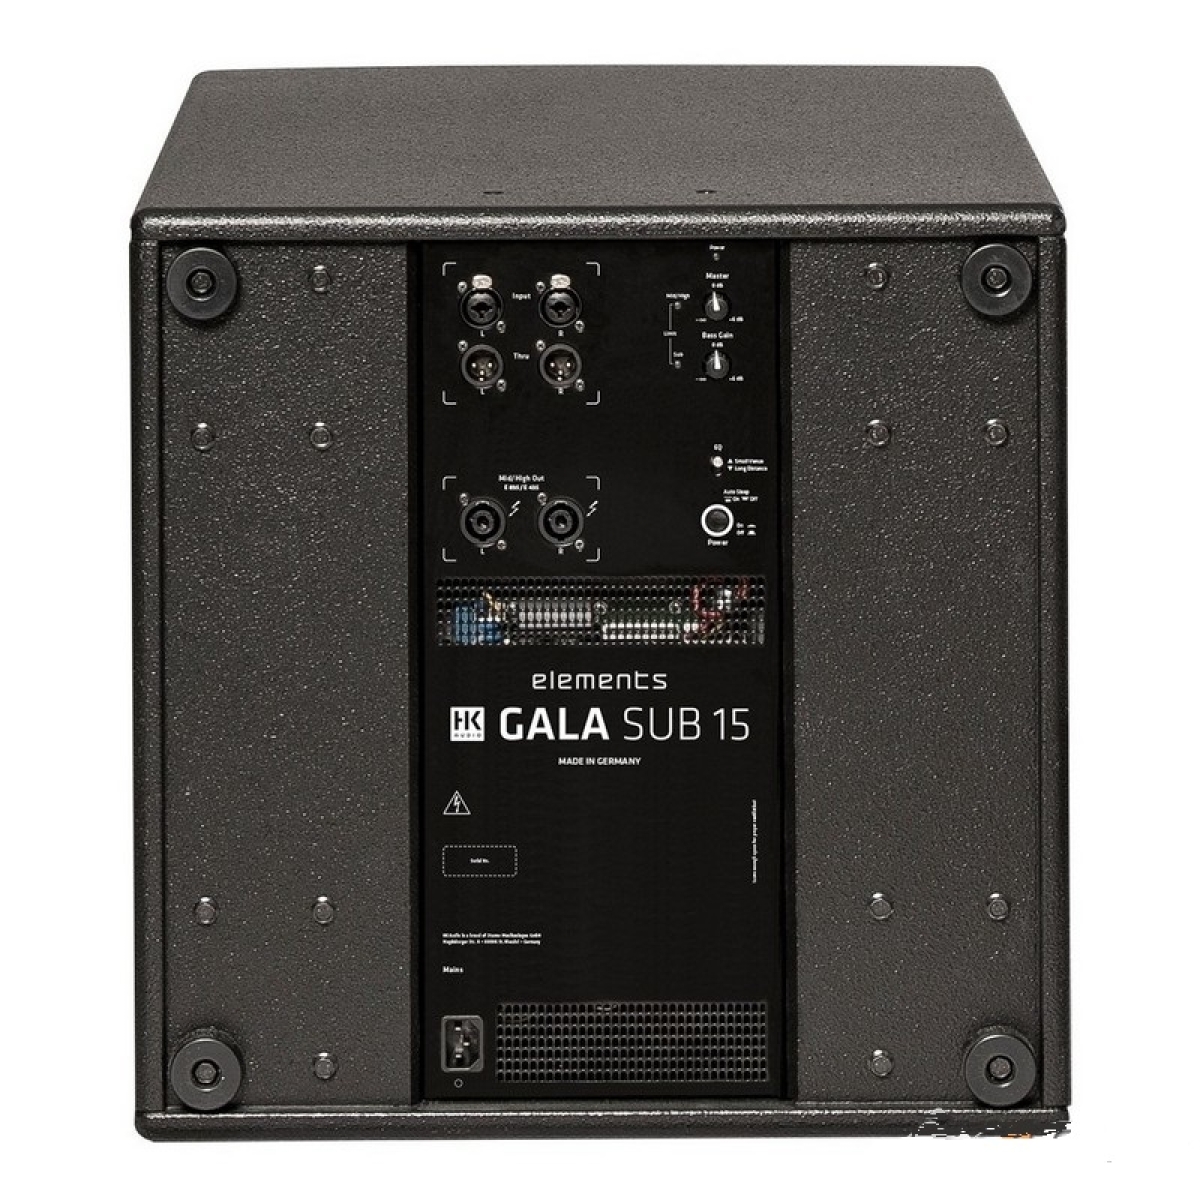 Сабвуфер HK Audio e 110 sub a. HK Audio elements e435. Pioneer VM-70. HK Audio RS 15 sub a. Element audio